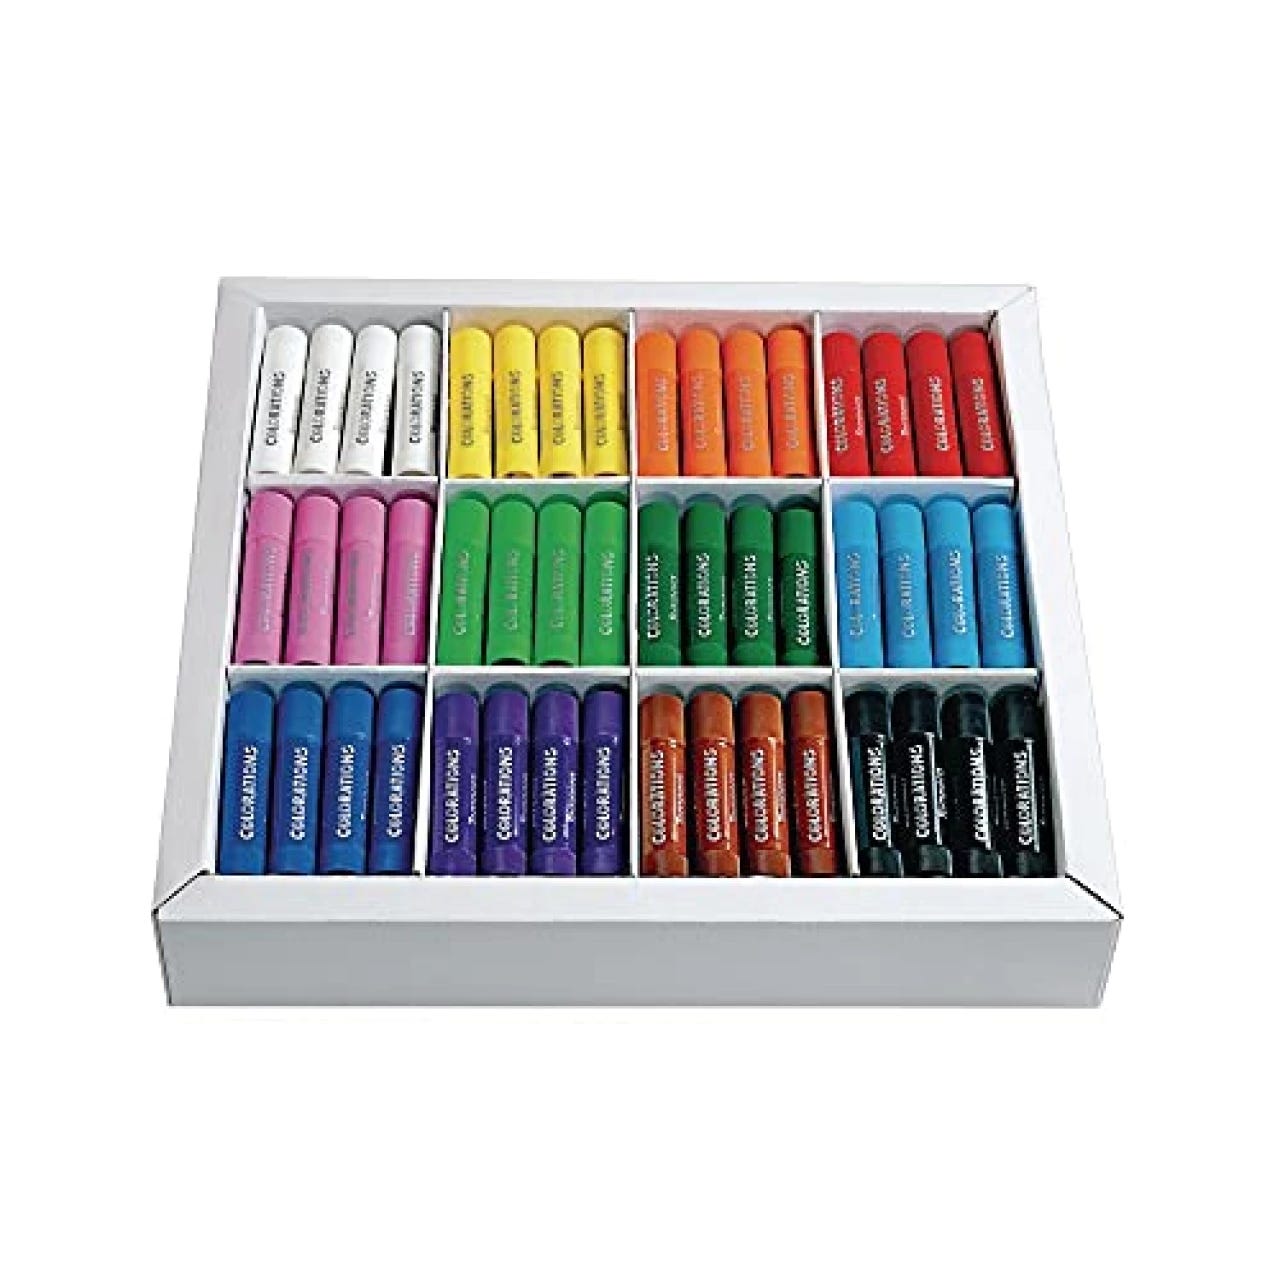  MayMoi Tempera Paint Sticks, Non-Toxic, Quick Drying